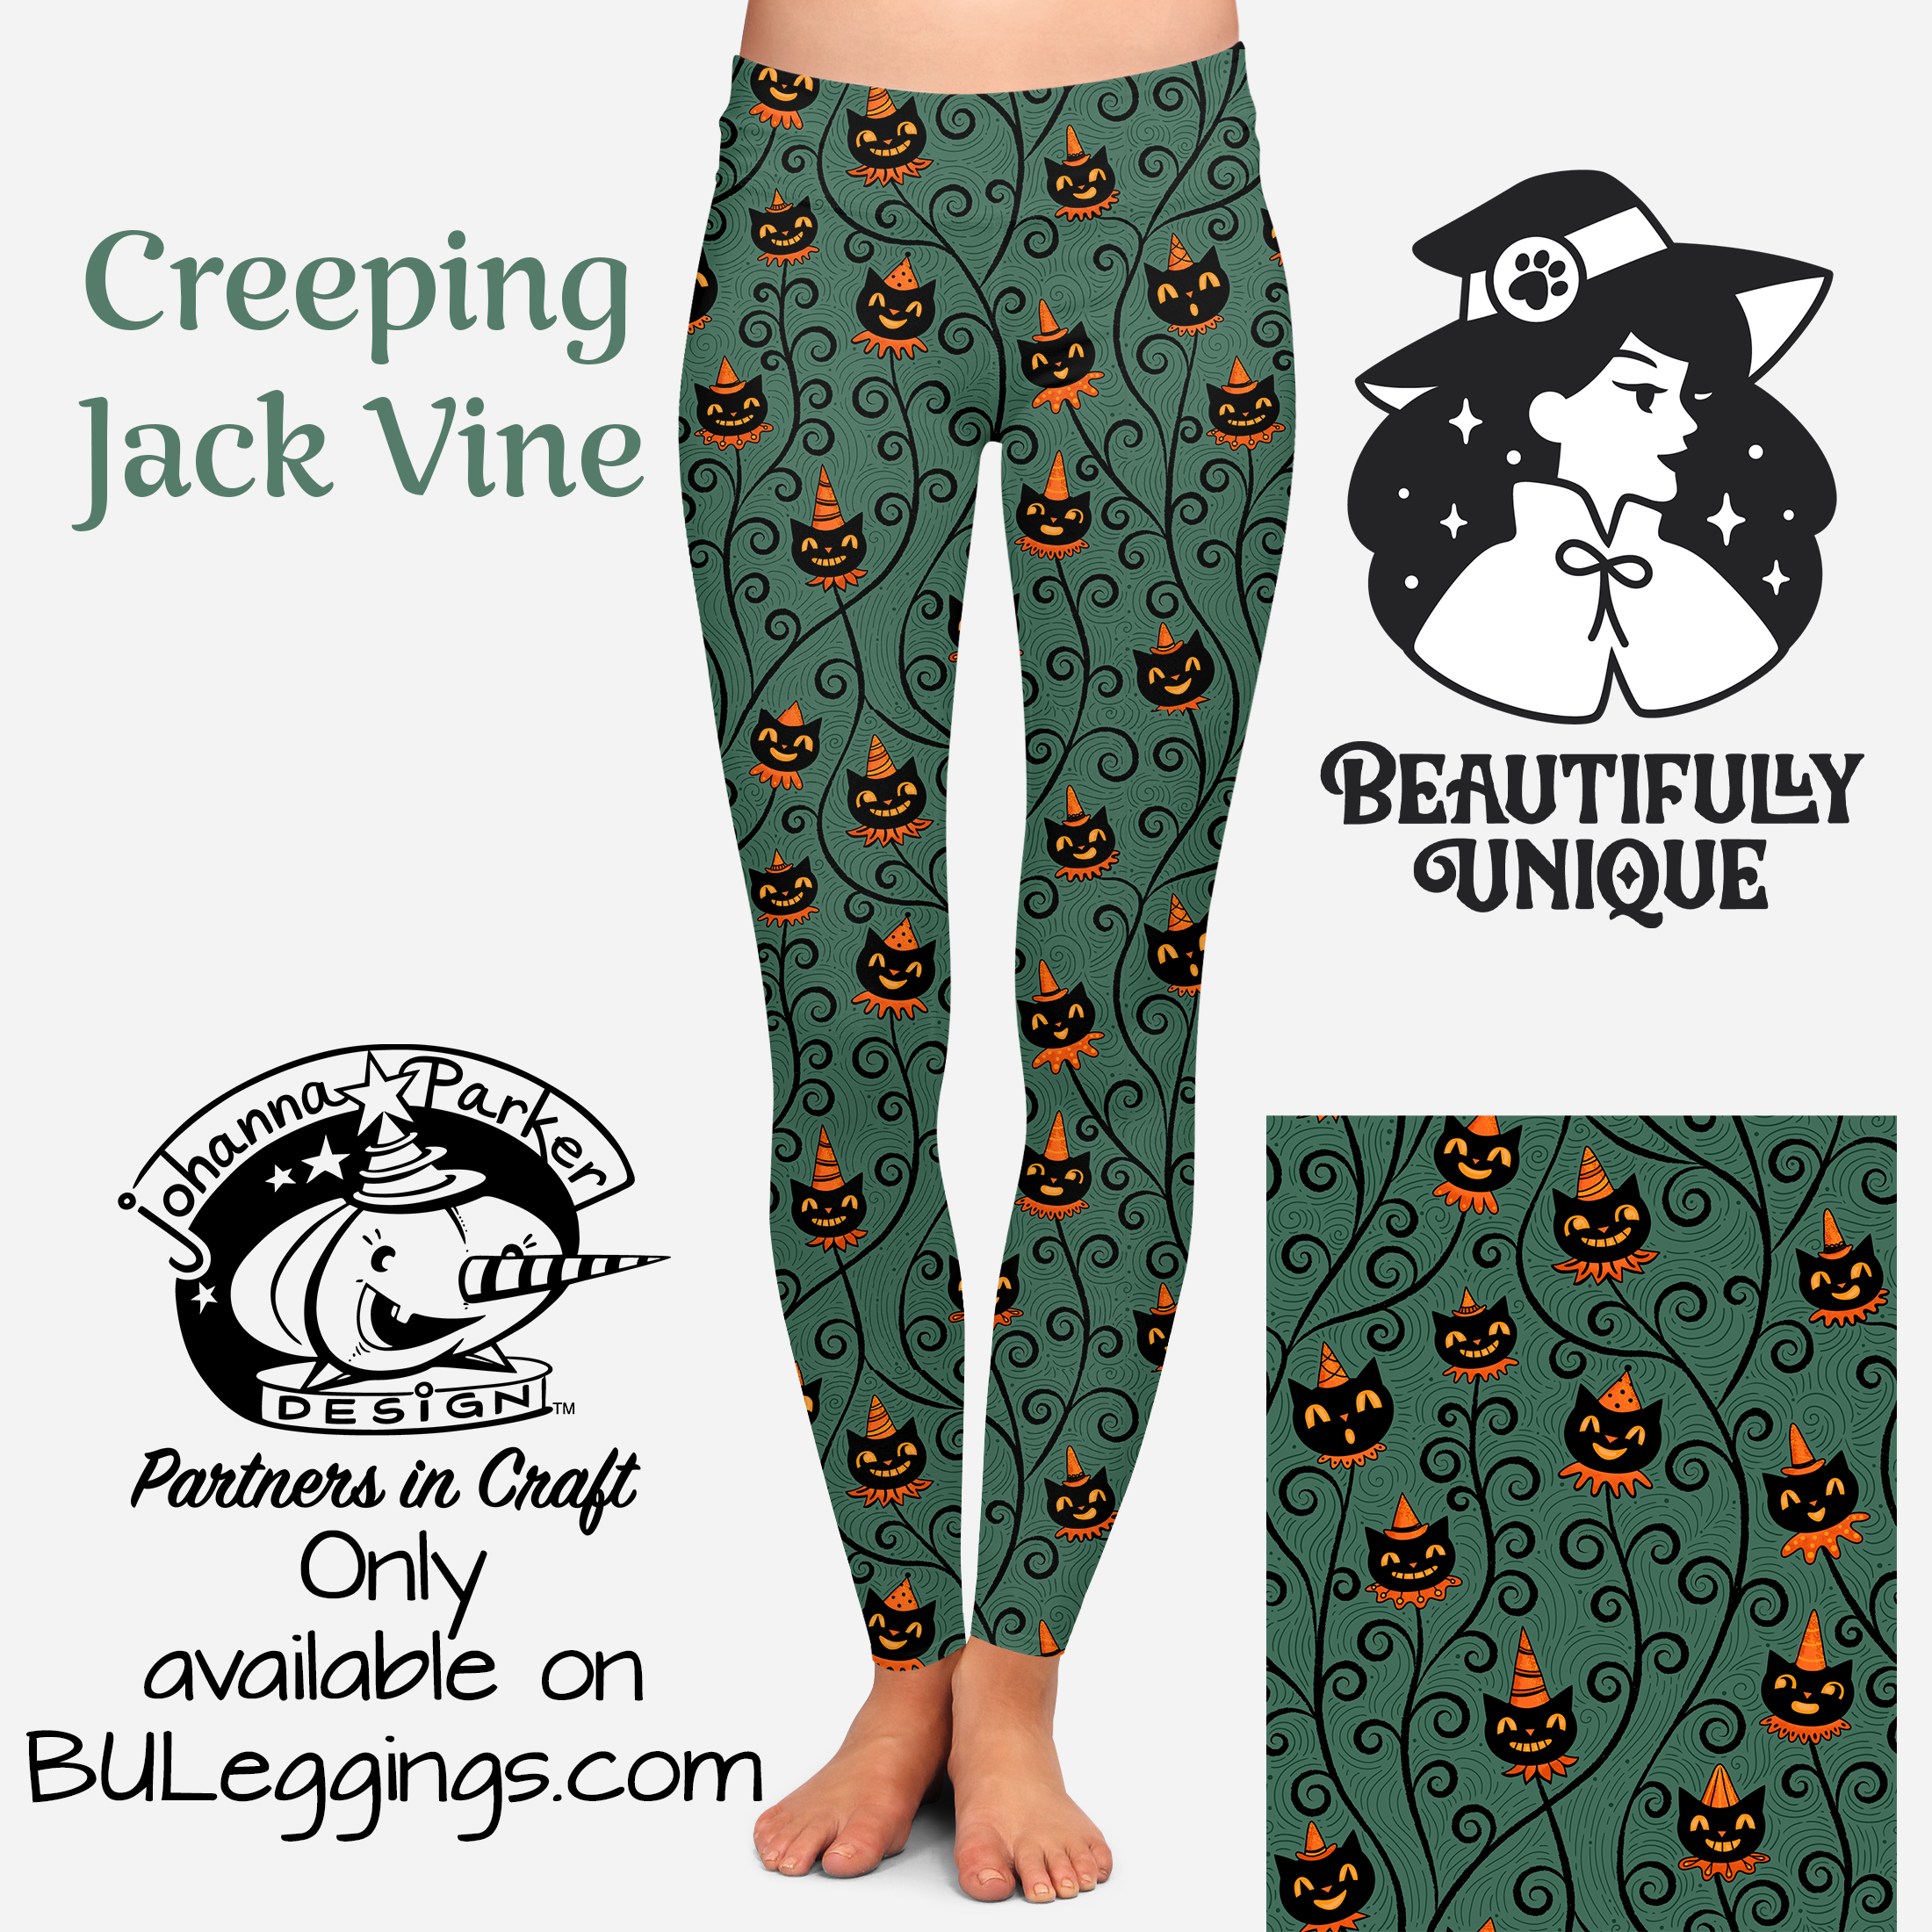 Creeping Jack Vine Black Vintage Cat (Johanna Parker Exclusive) -  High-quality Handcrafted Vibrant Leggings – Quirks!